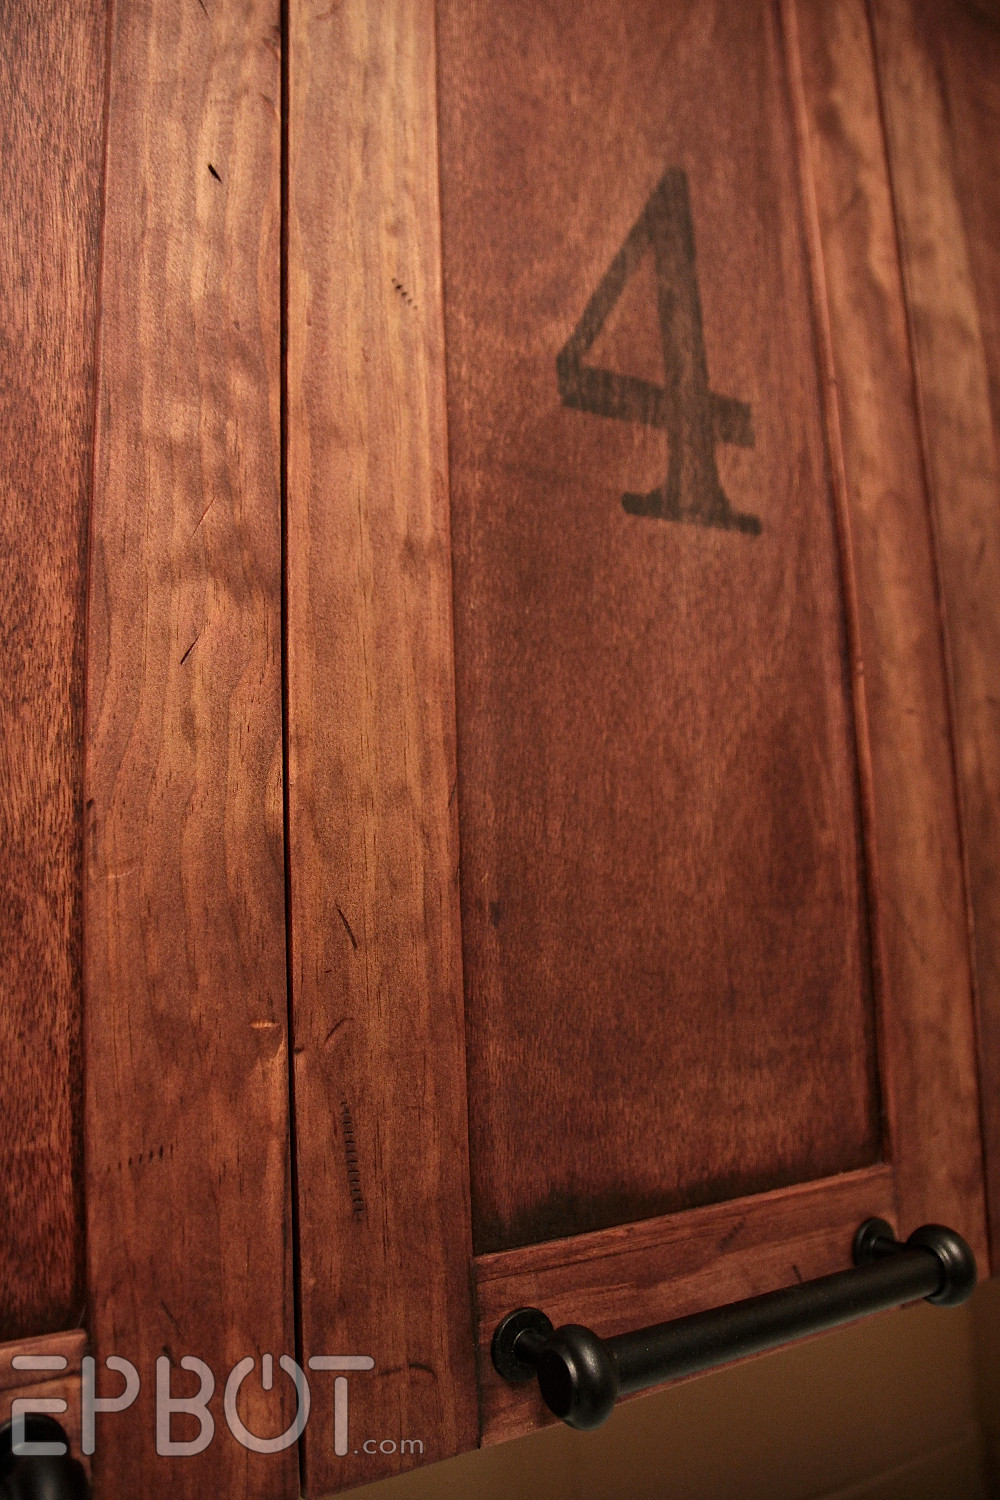 Best ideas about Diy Cabinet Doors
. Save or Pin EPBOT DIY Vintage Rustic Cabinet Doors Now.